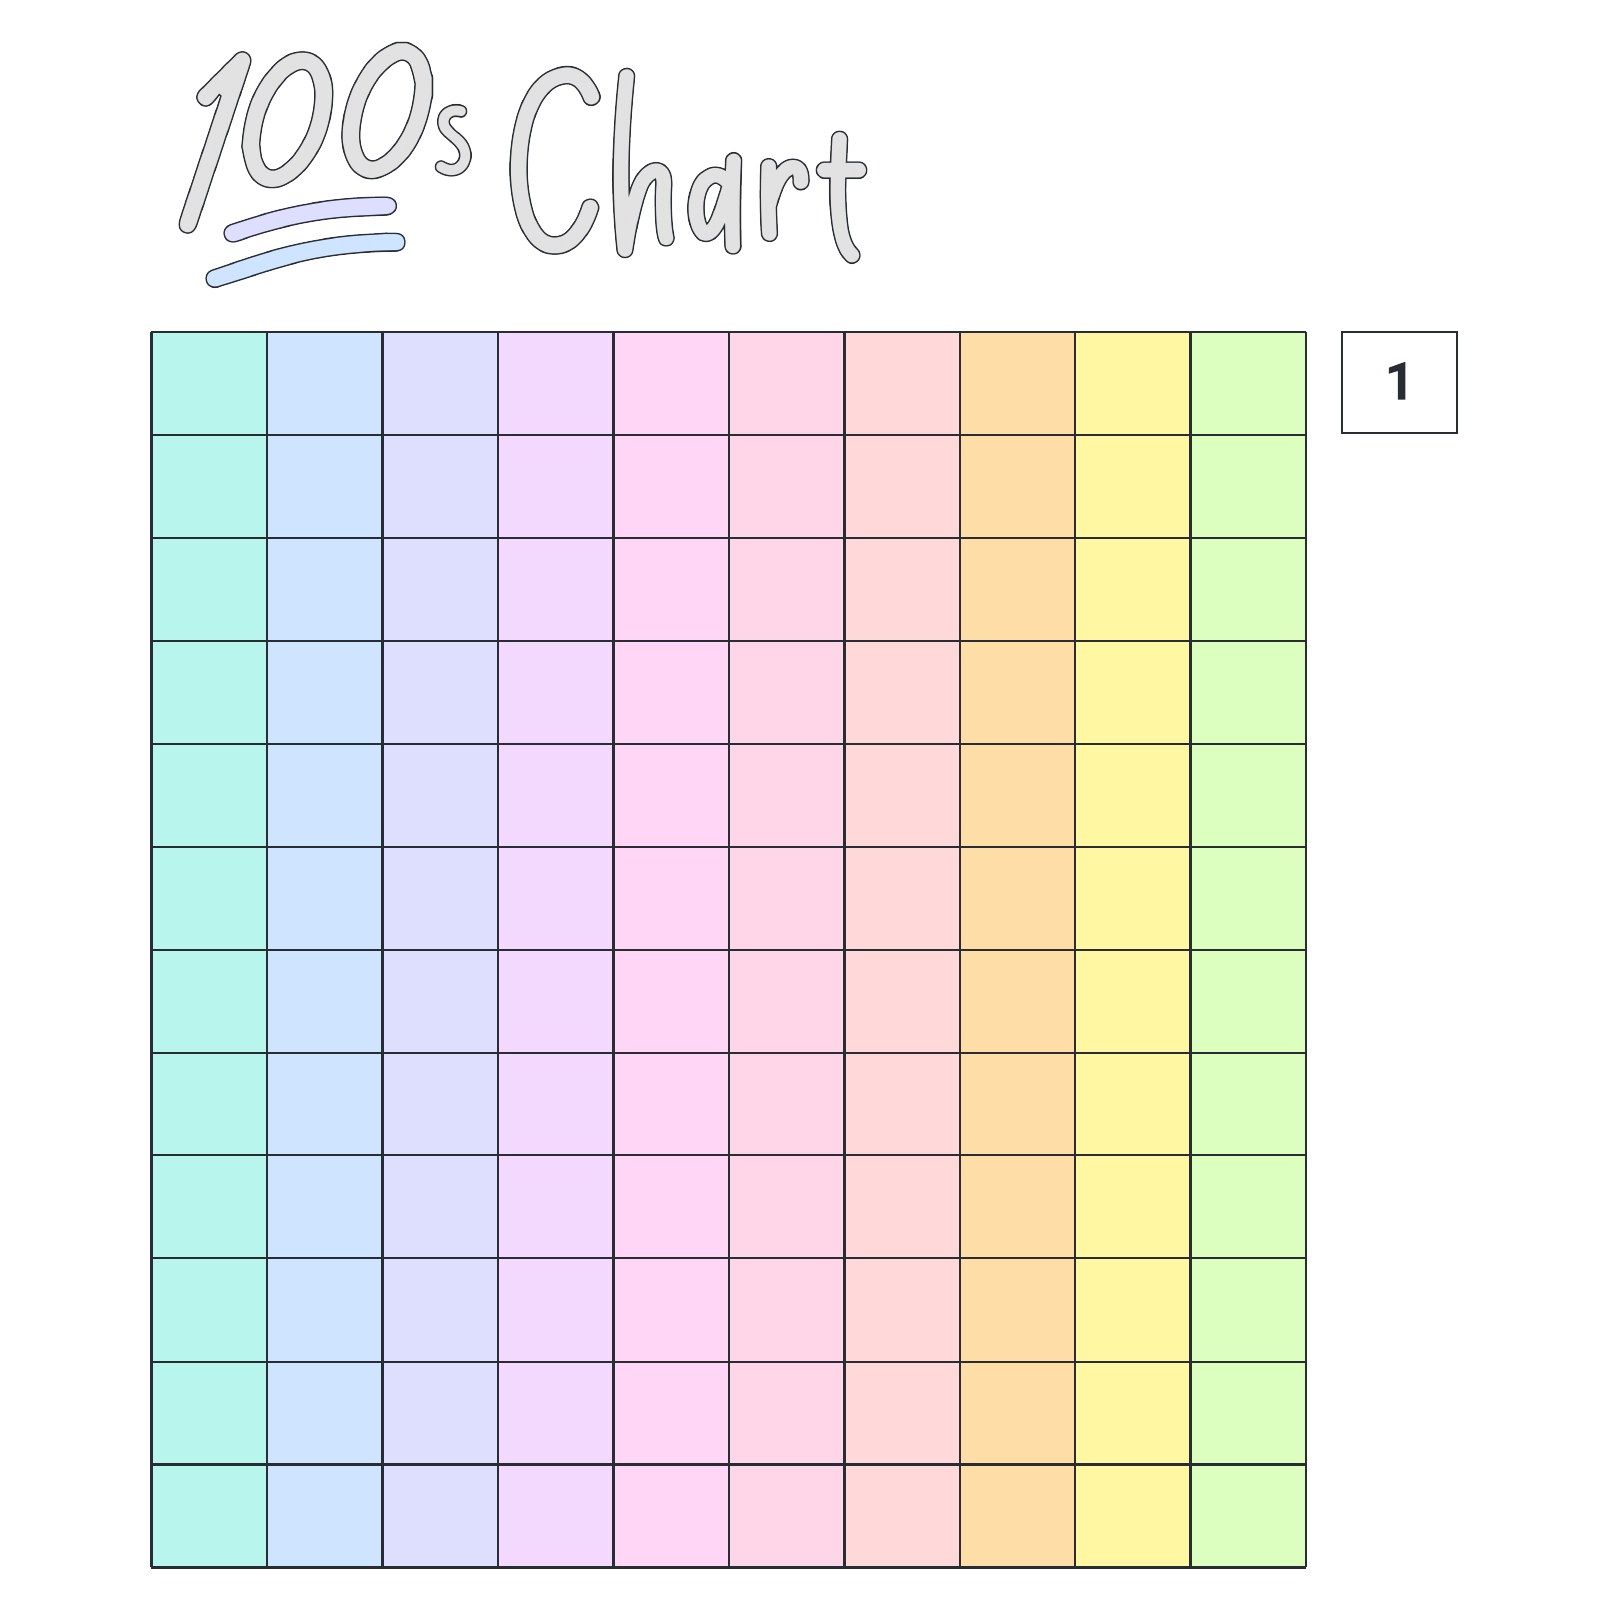 Hundreds chart example